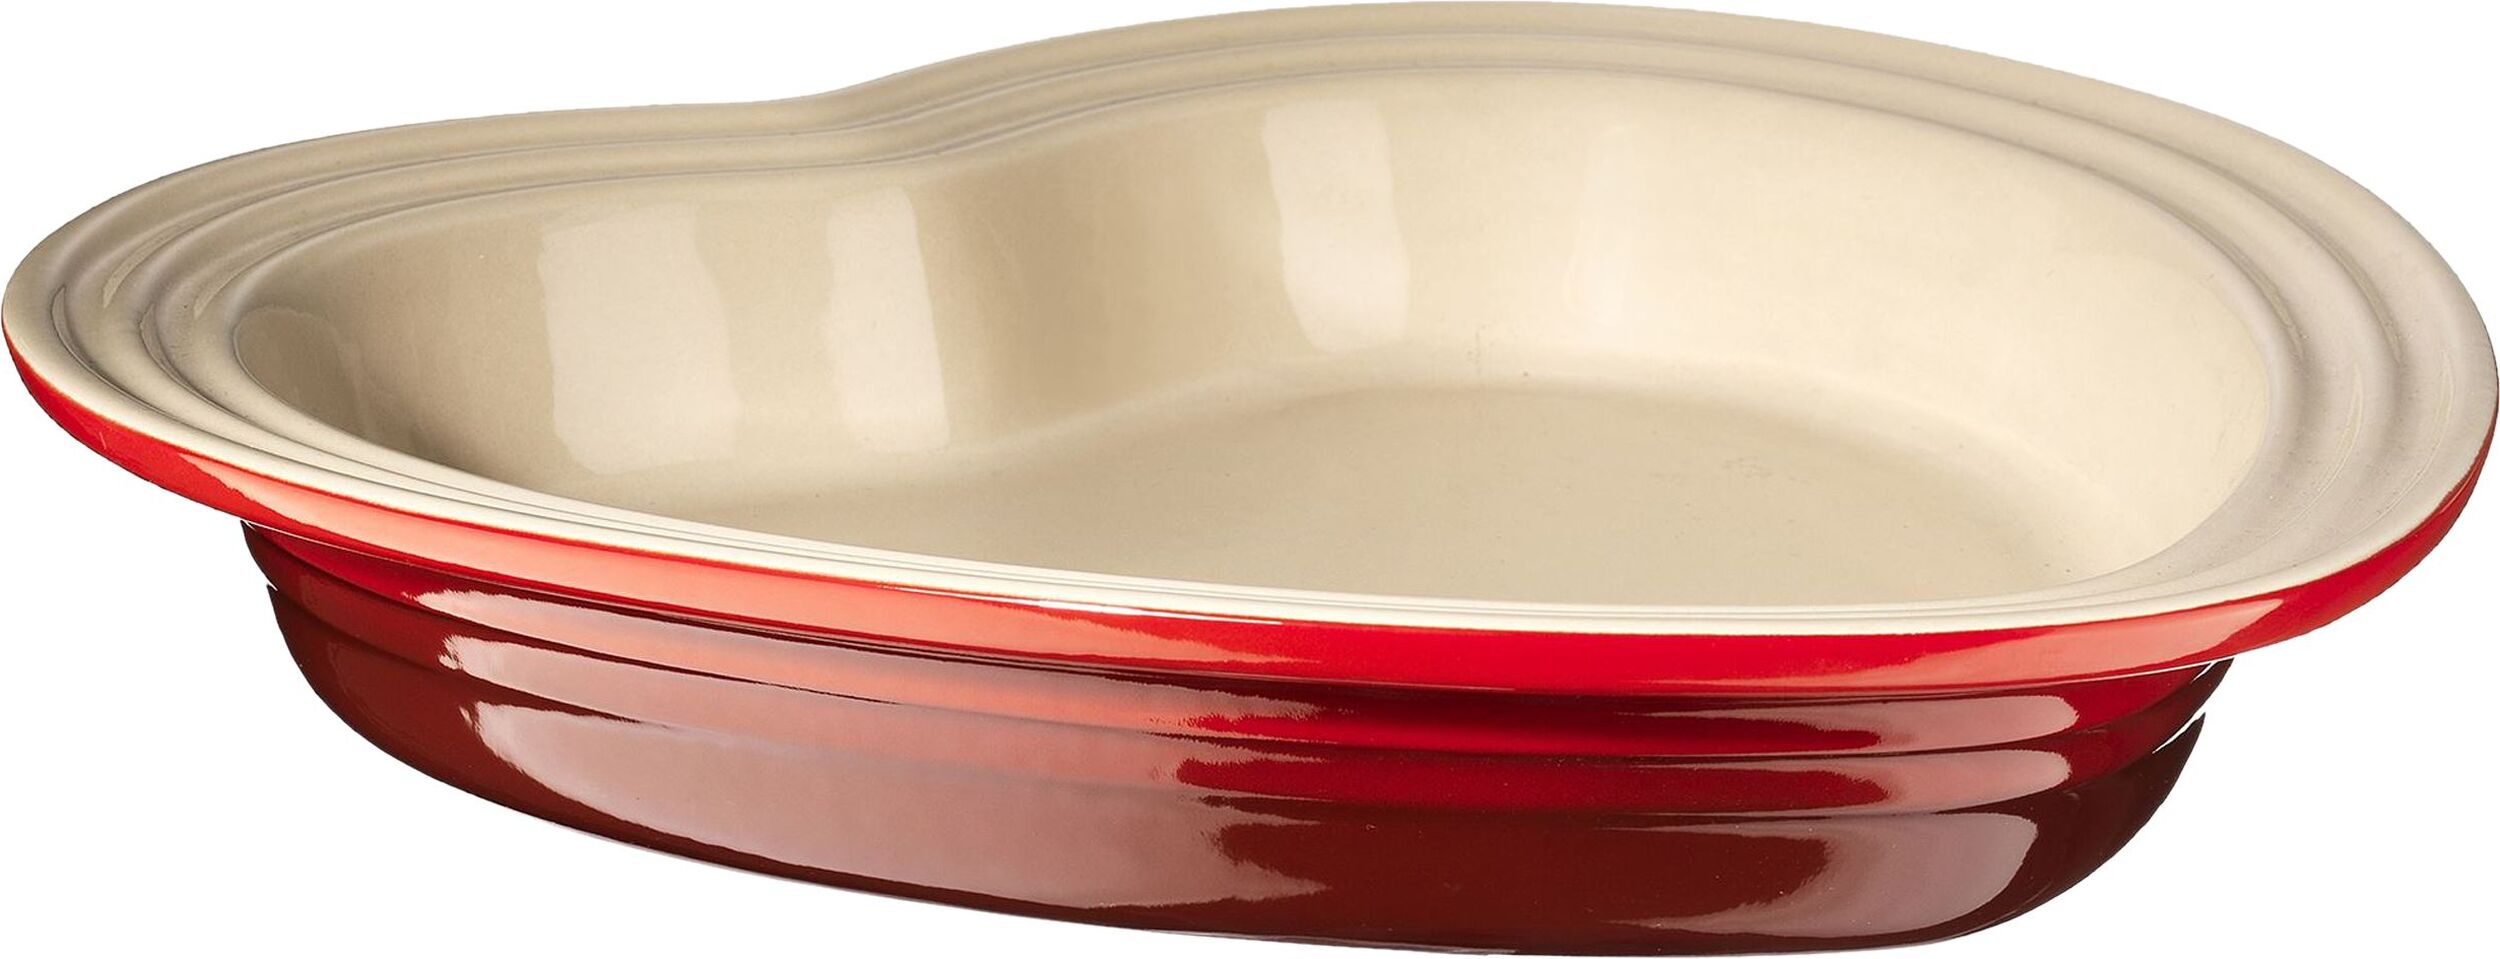 Le Creuset Rectangular Dish w/ Platter Lid (Cherry)